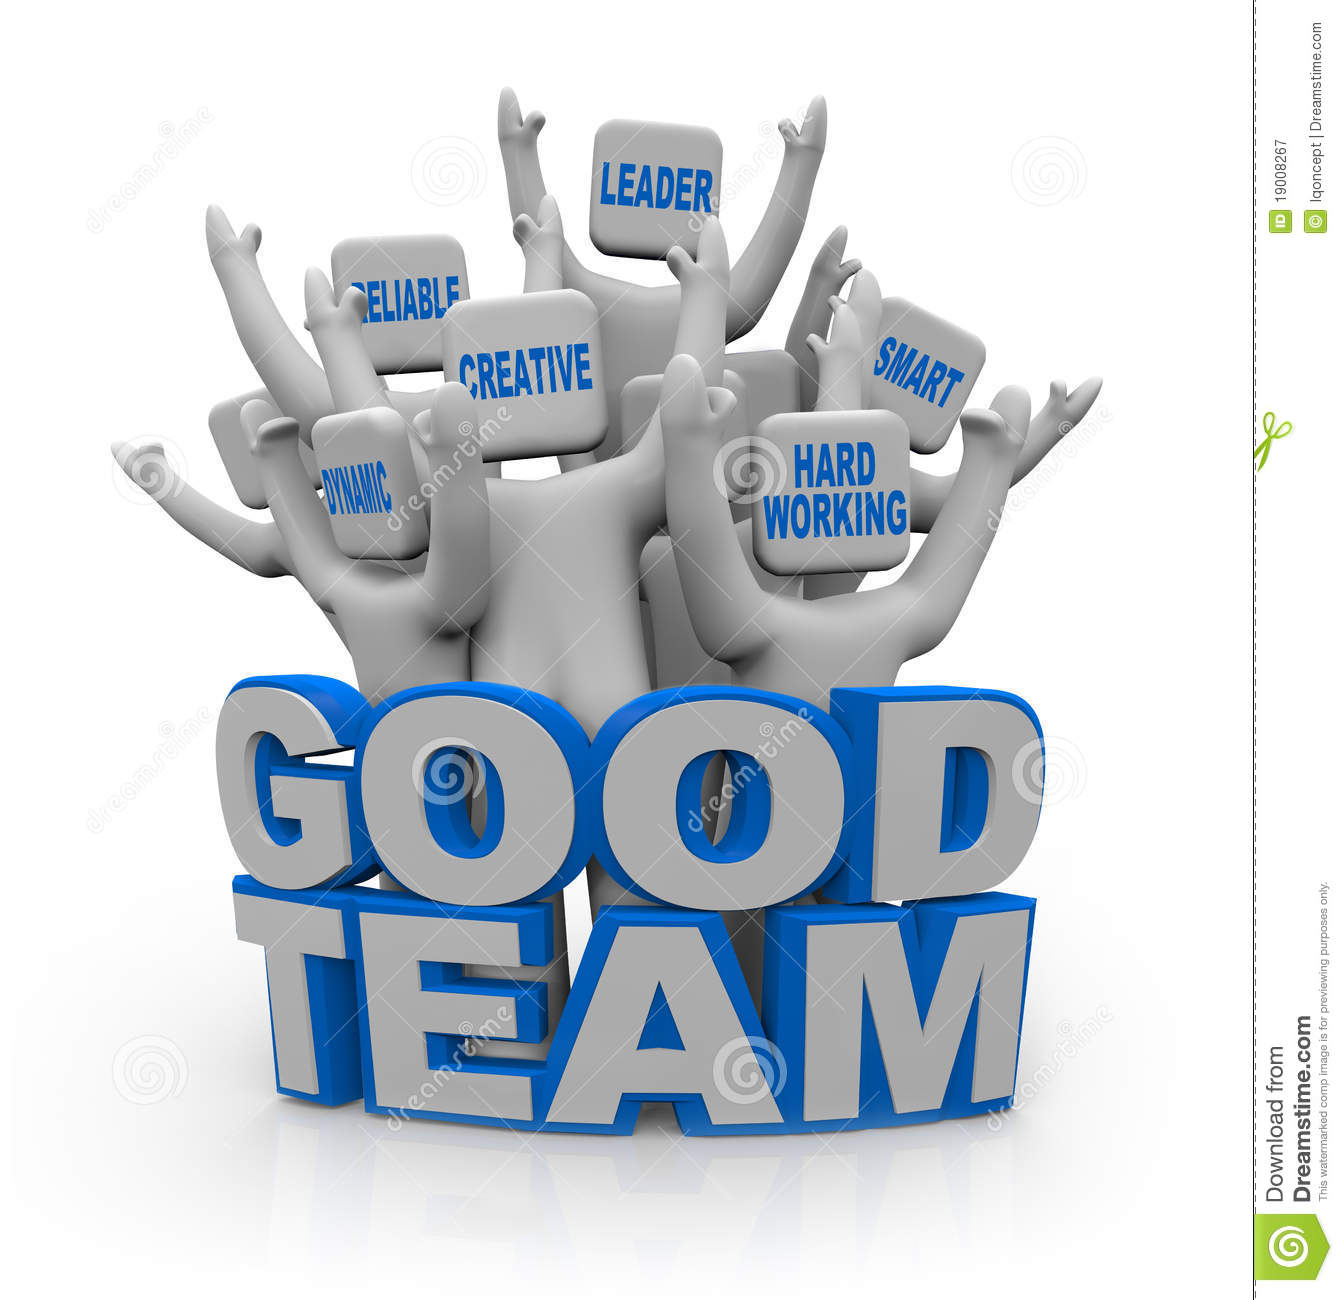 Good Team   People With Teamwork Qualities